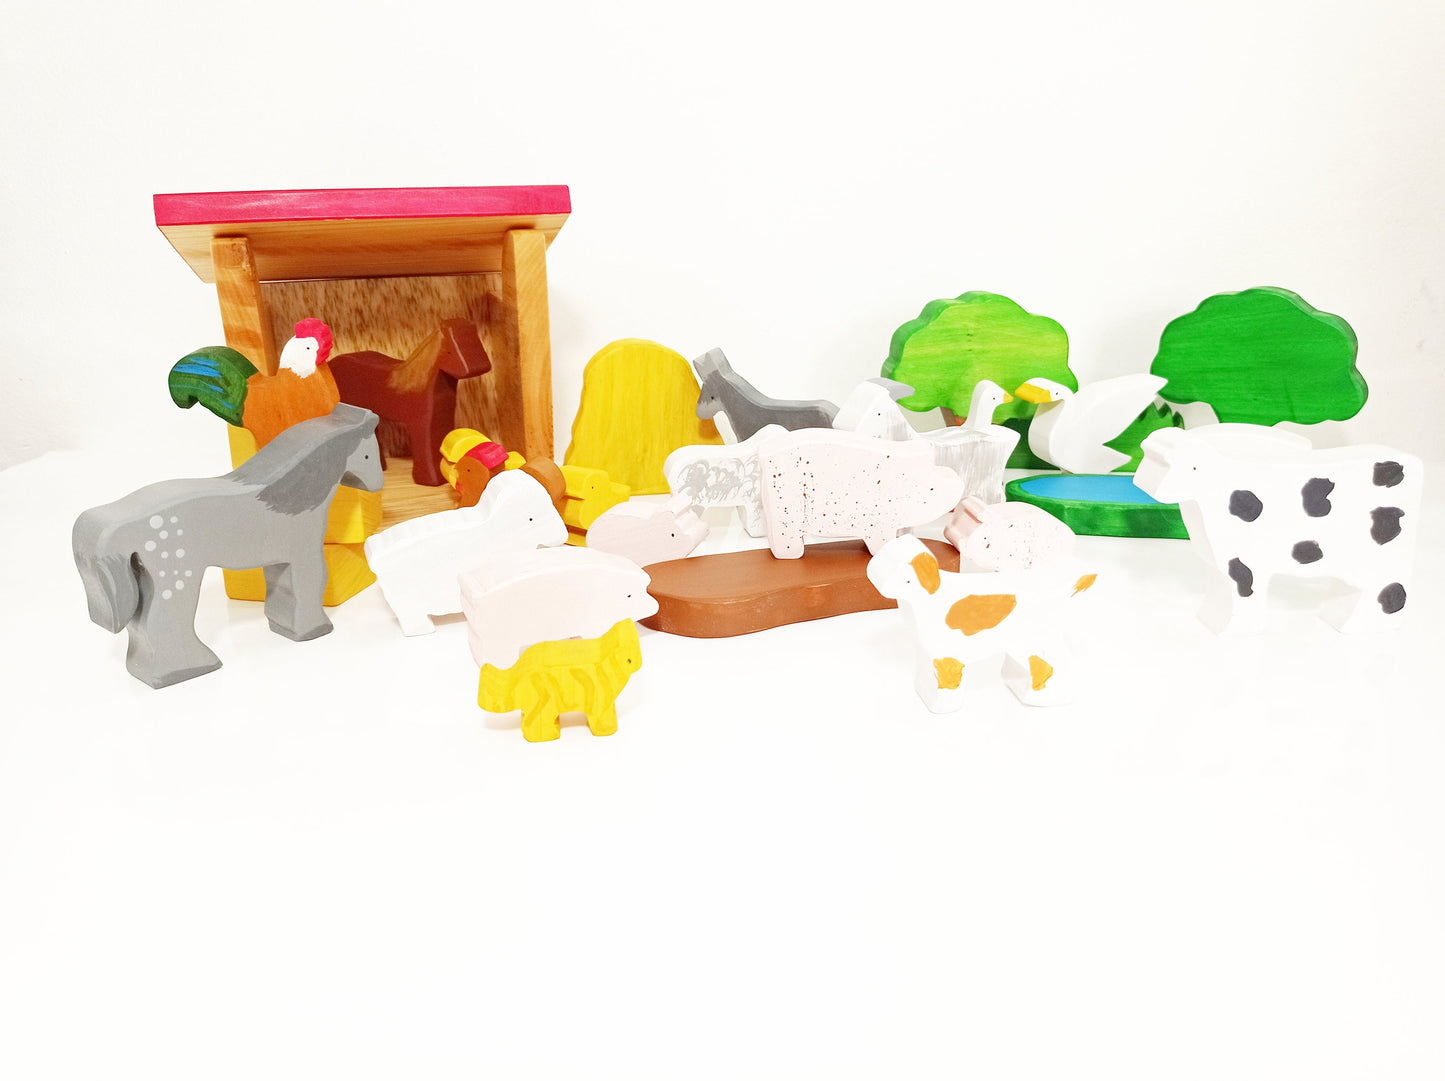 Farm scene wooden toy scene, waldorf inspired wooden farm toy set, wooden farm toy, gift for kids, wooden farm, horse house wooden toy set